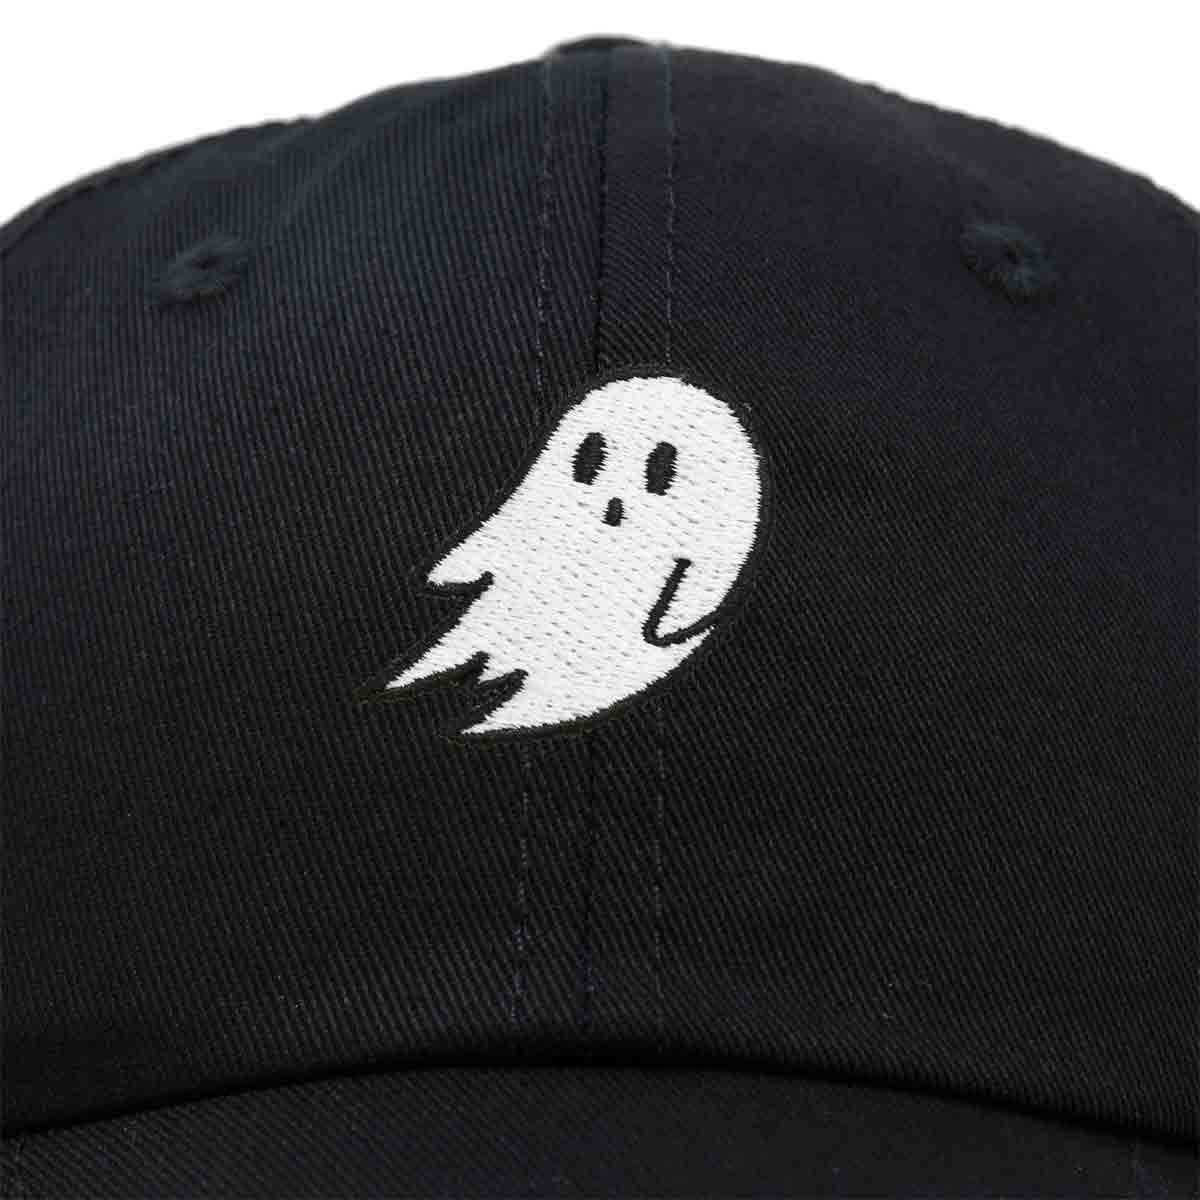 Dalix Ghost Cap